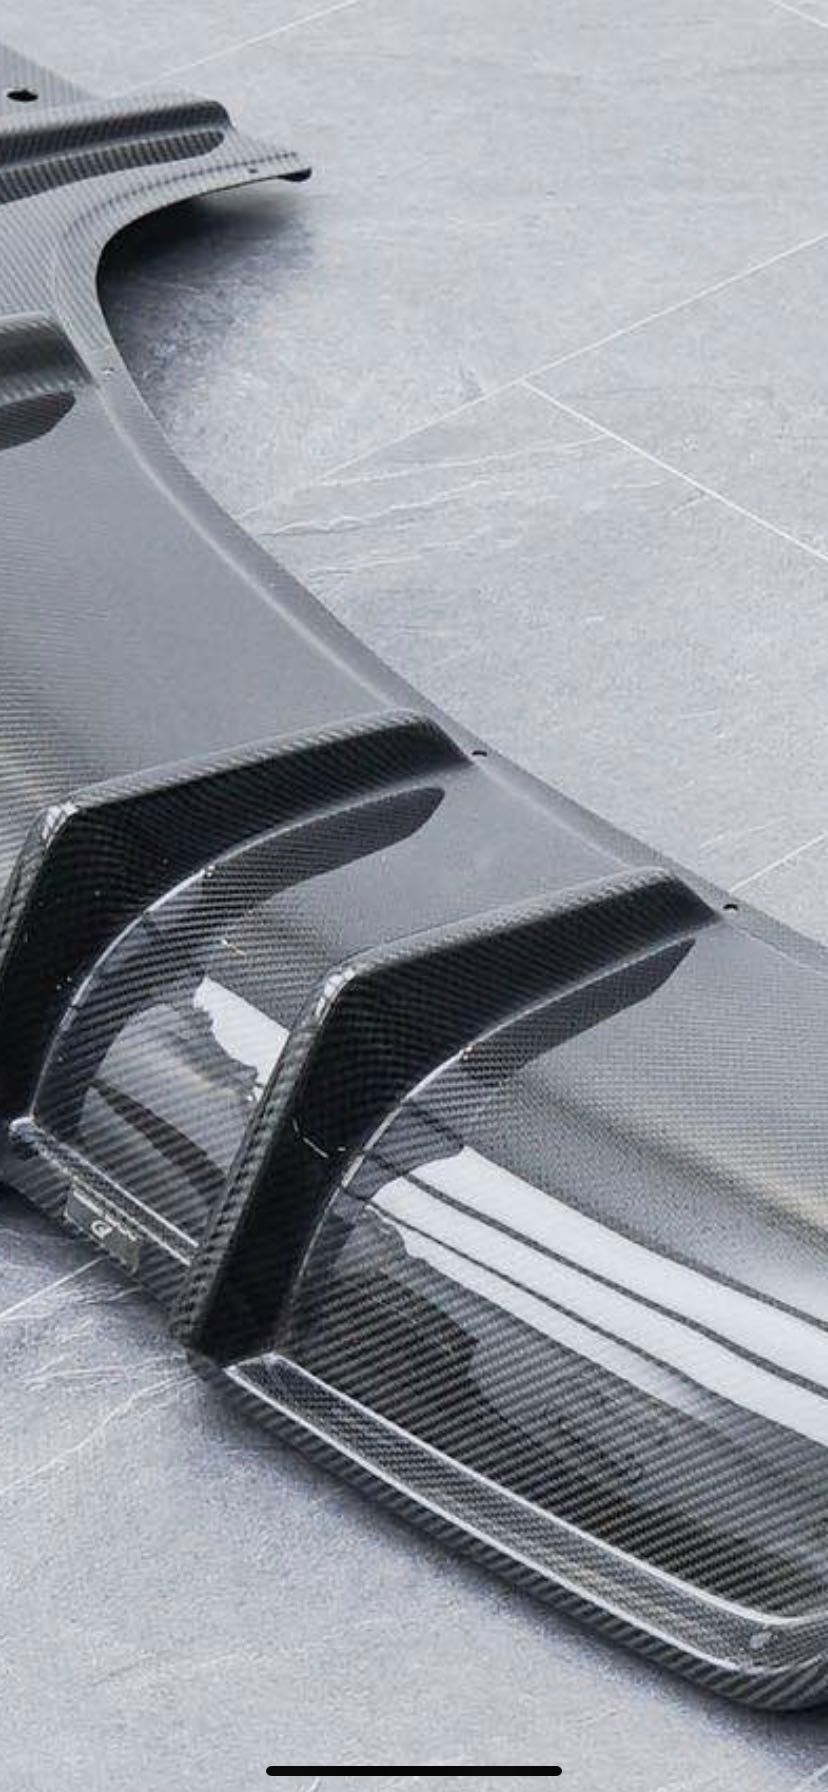 Future Design Carbon Fiber REAR DIFFUSER for Tesla Model 3